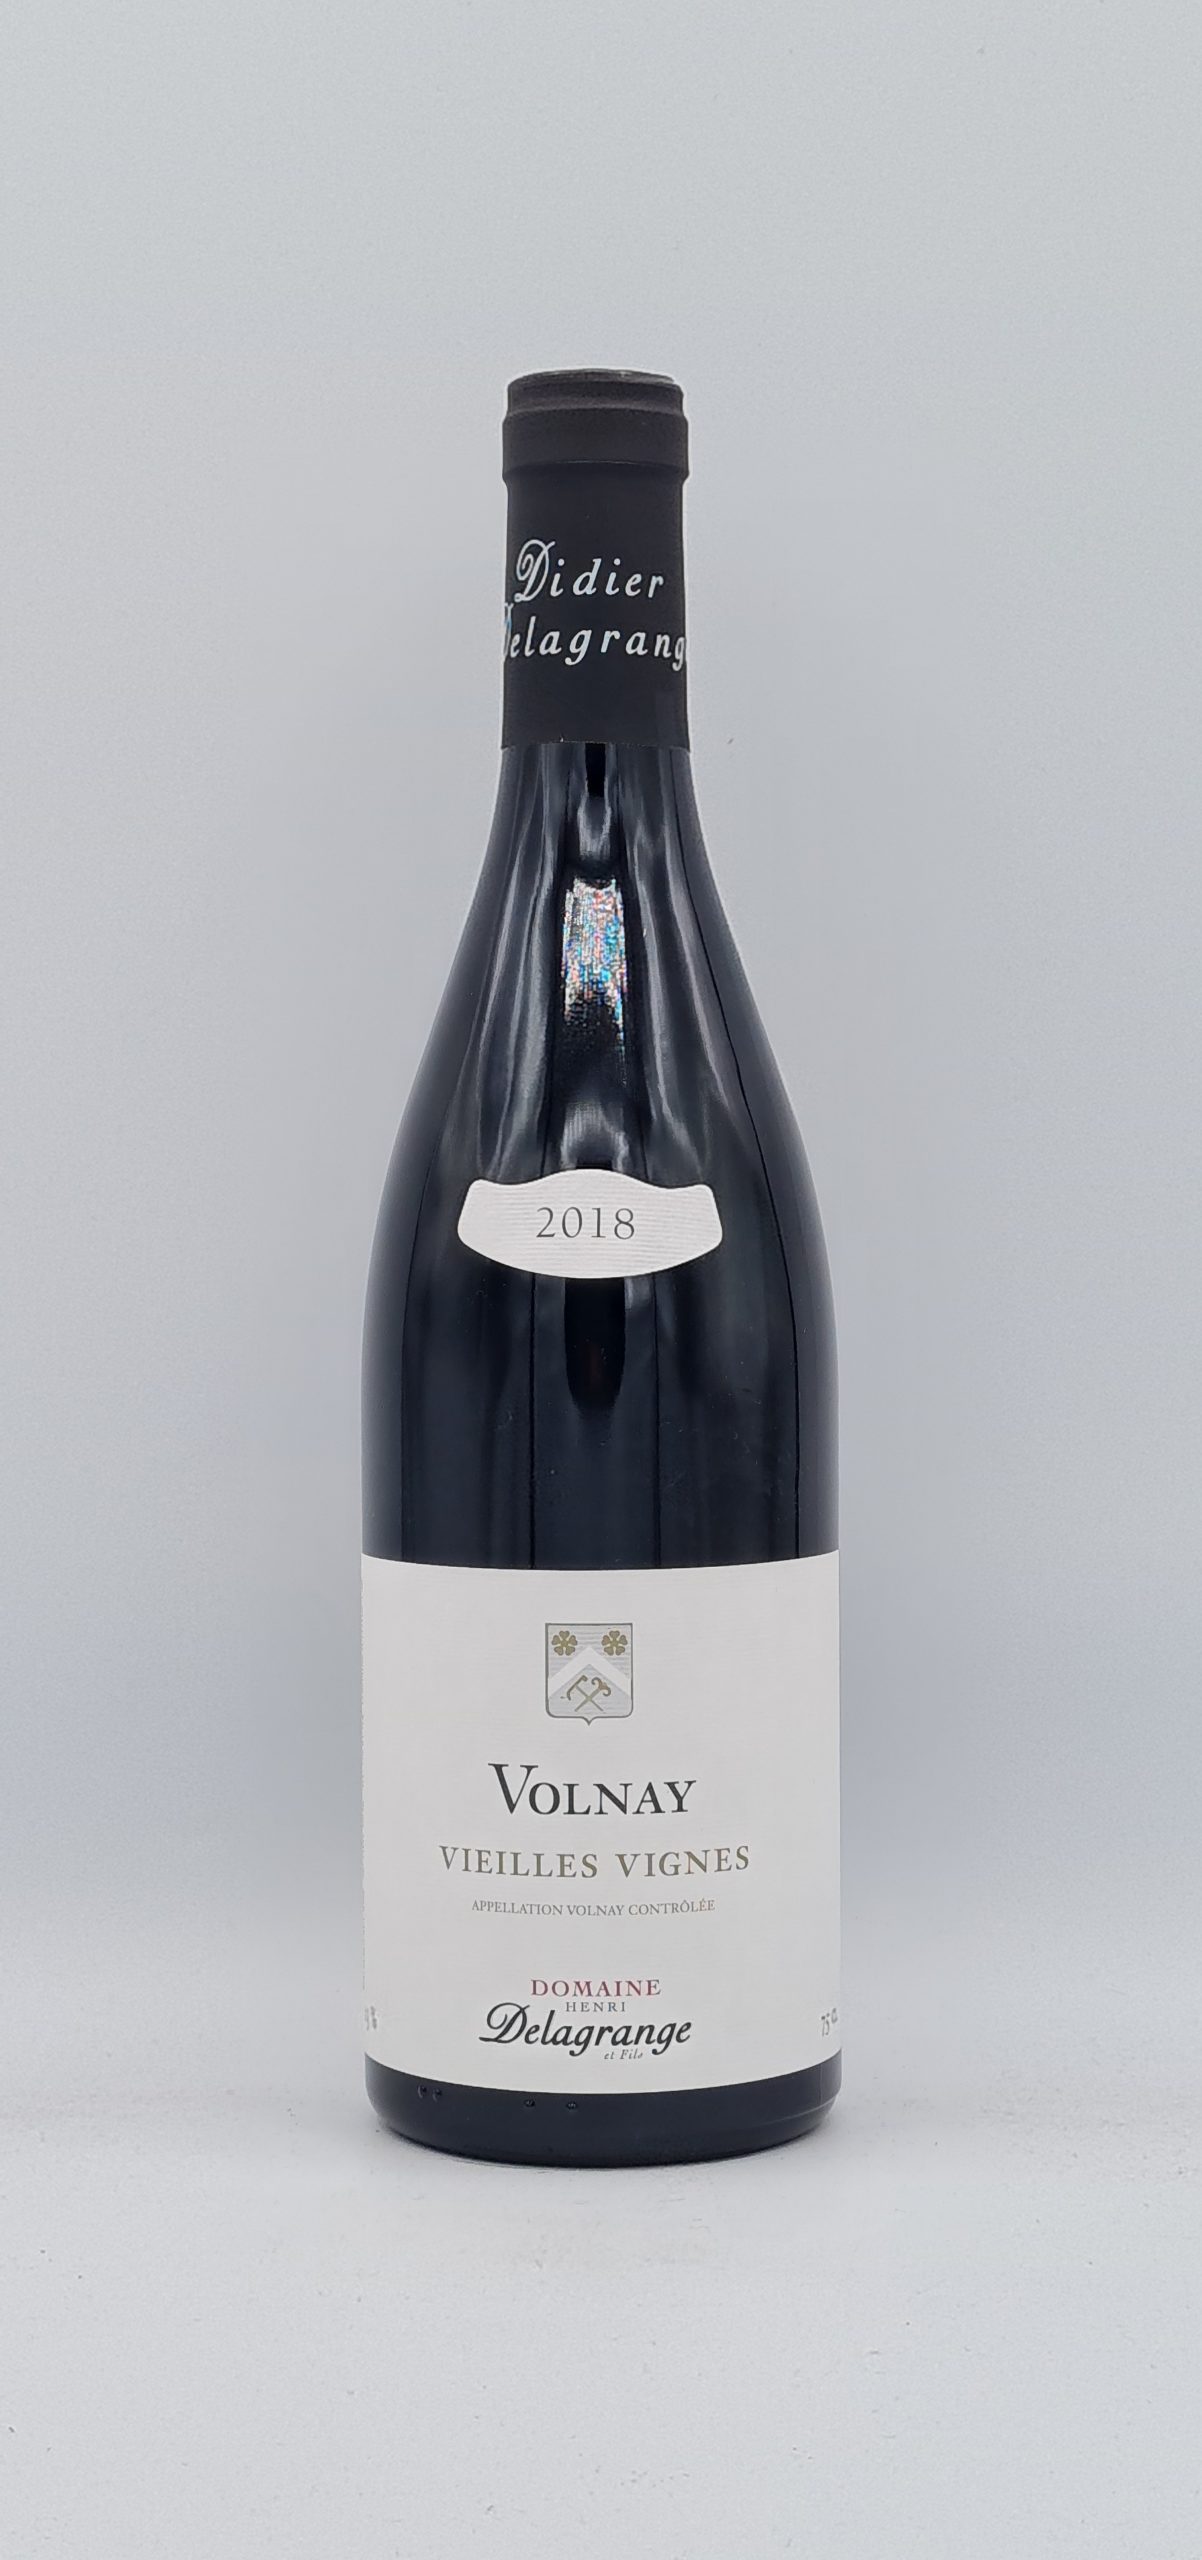 Volnay “Vieilles Vignes” 2018 Domaine Delagrange